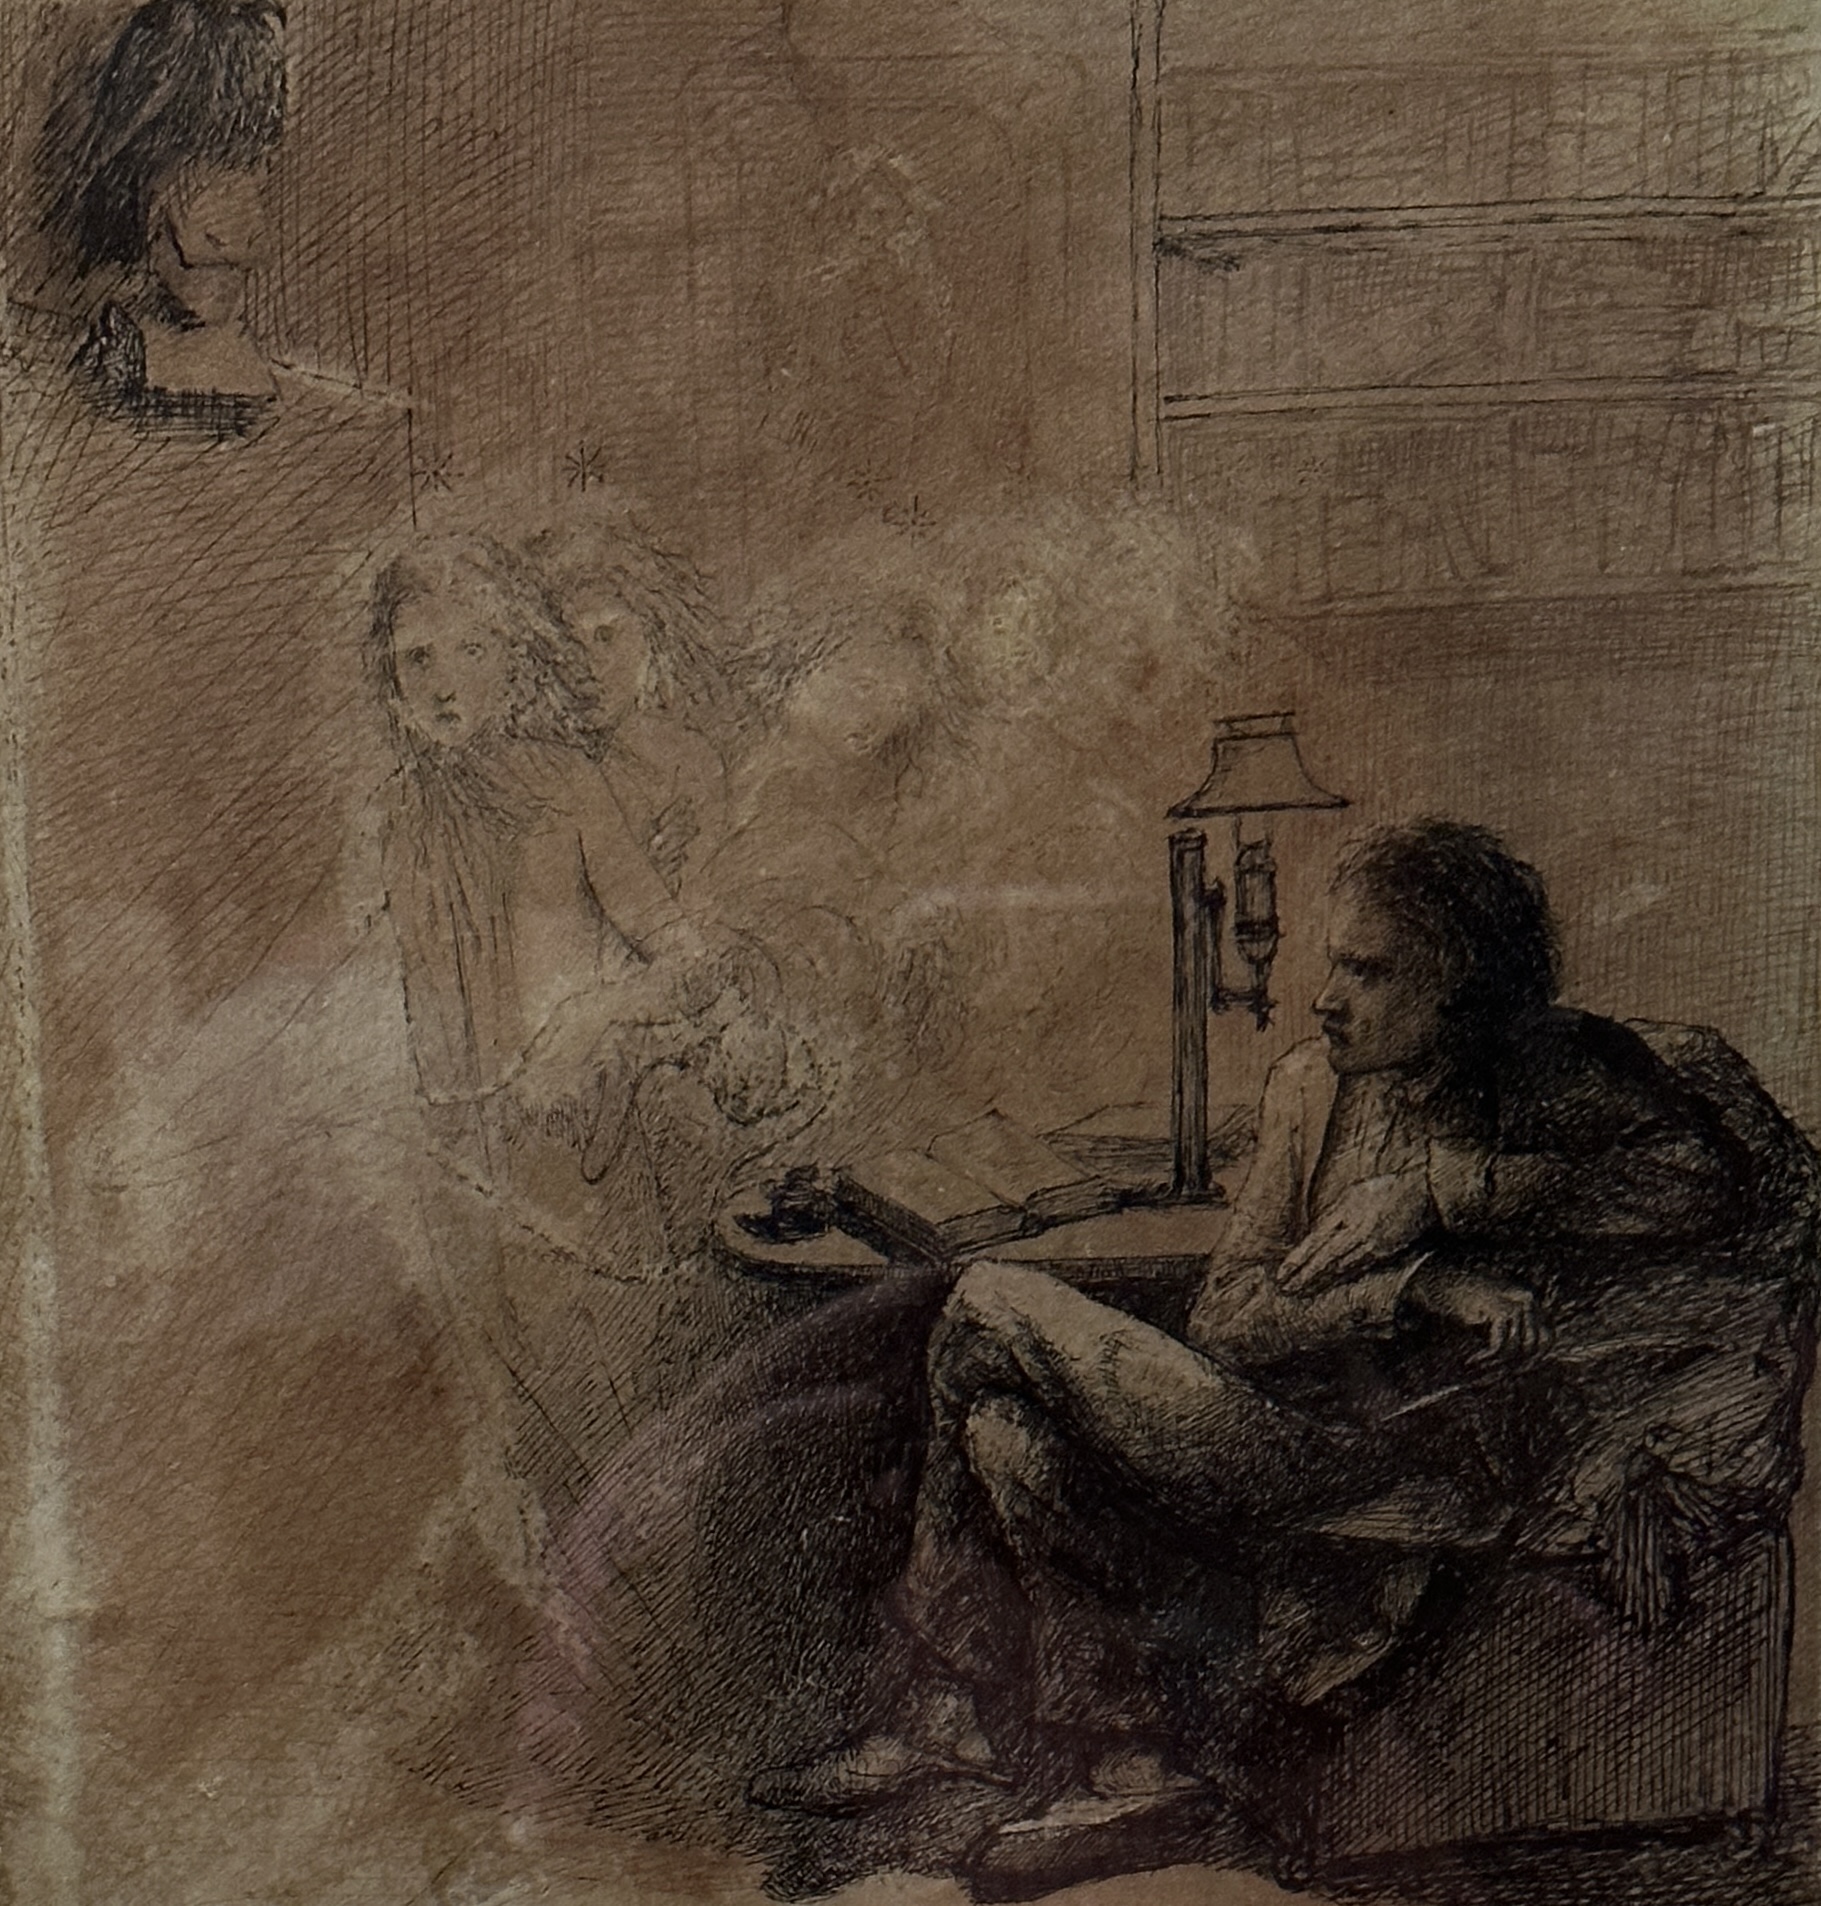 Rossetti Tate Angel Footfalls, DG Rosetti The Raven by Edgar Allen Poe 1848